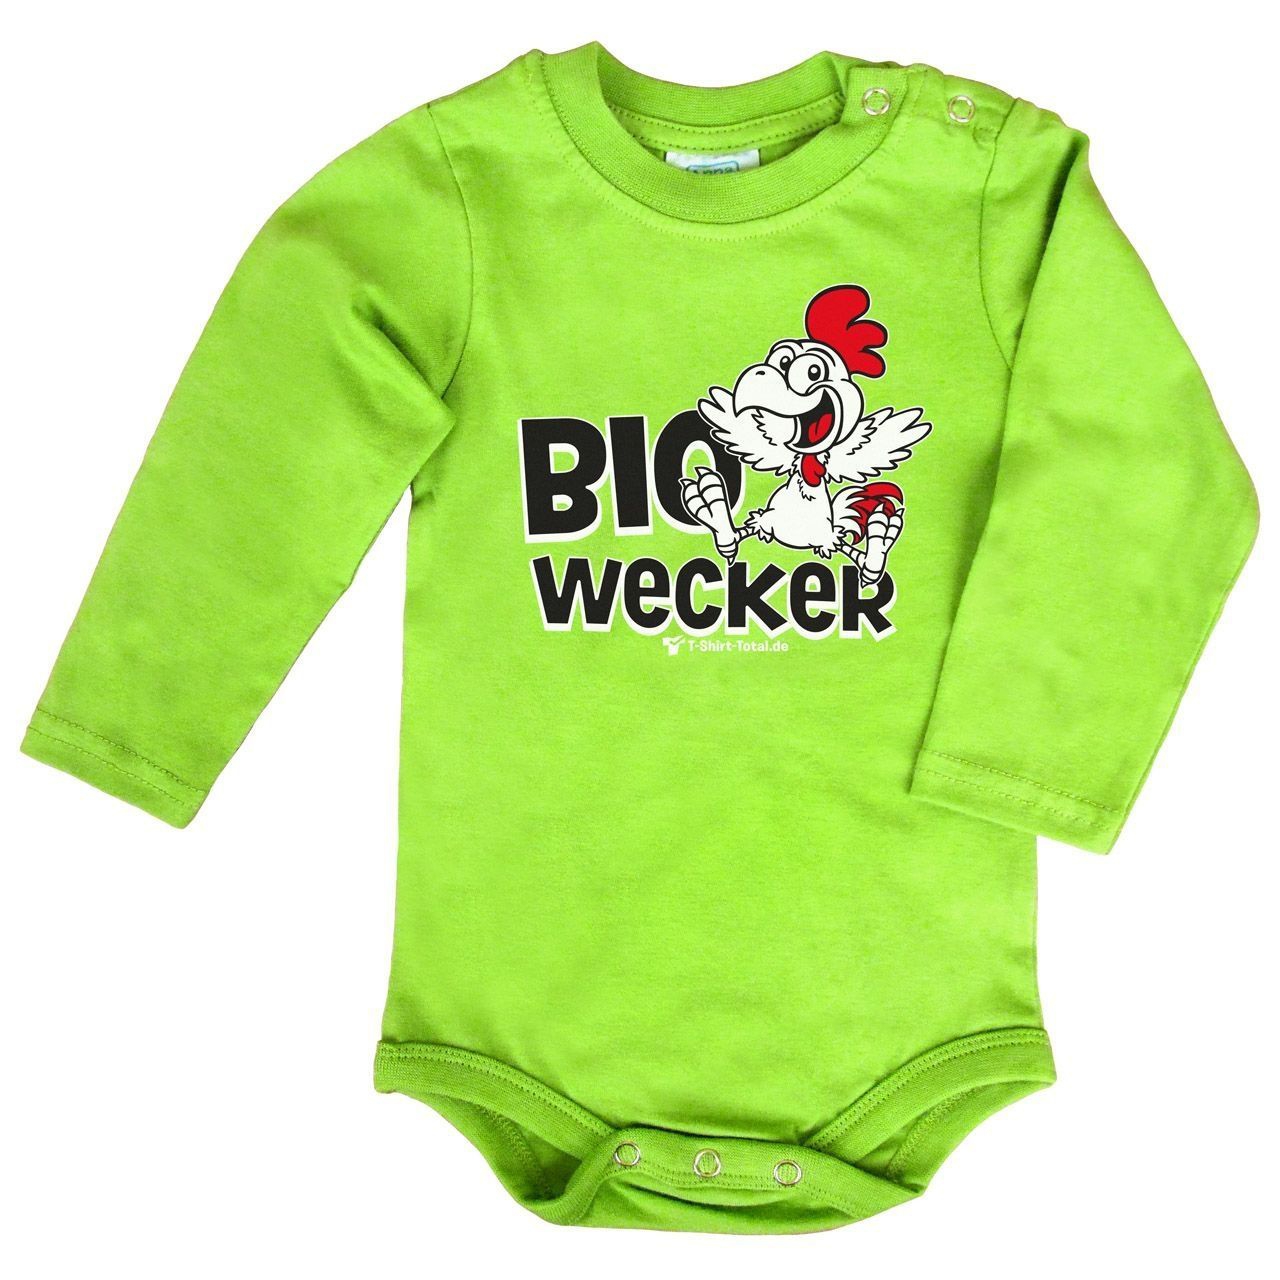 Bio Wecker Baby Body Langarm hellgrün 68 / 74